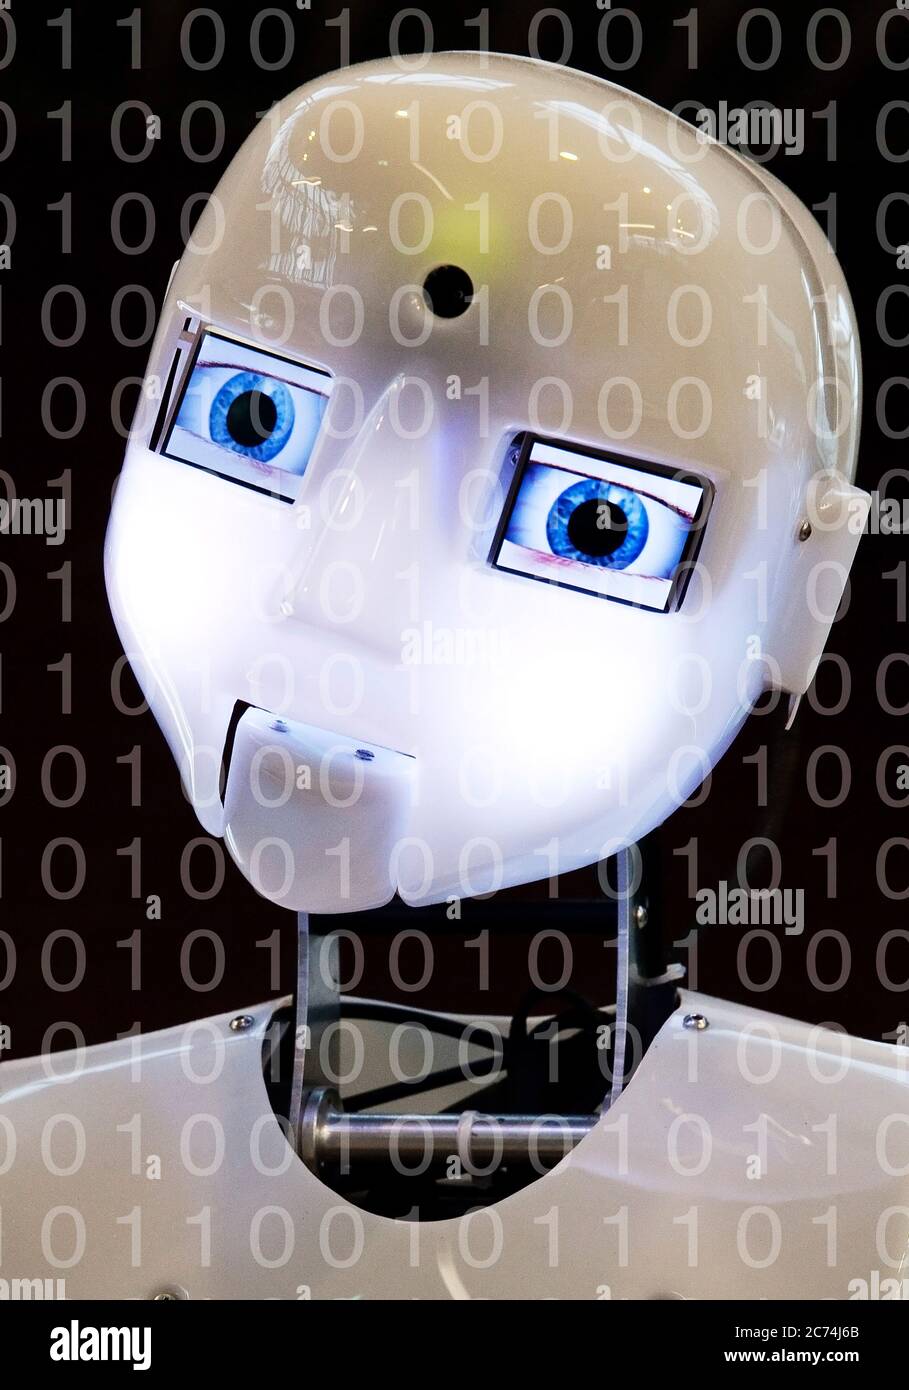 humanoid robot with binary code, Germany Stock Photo